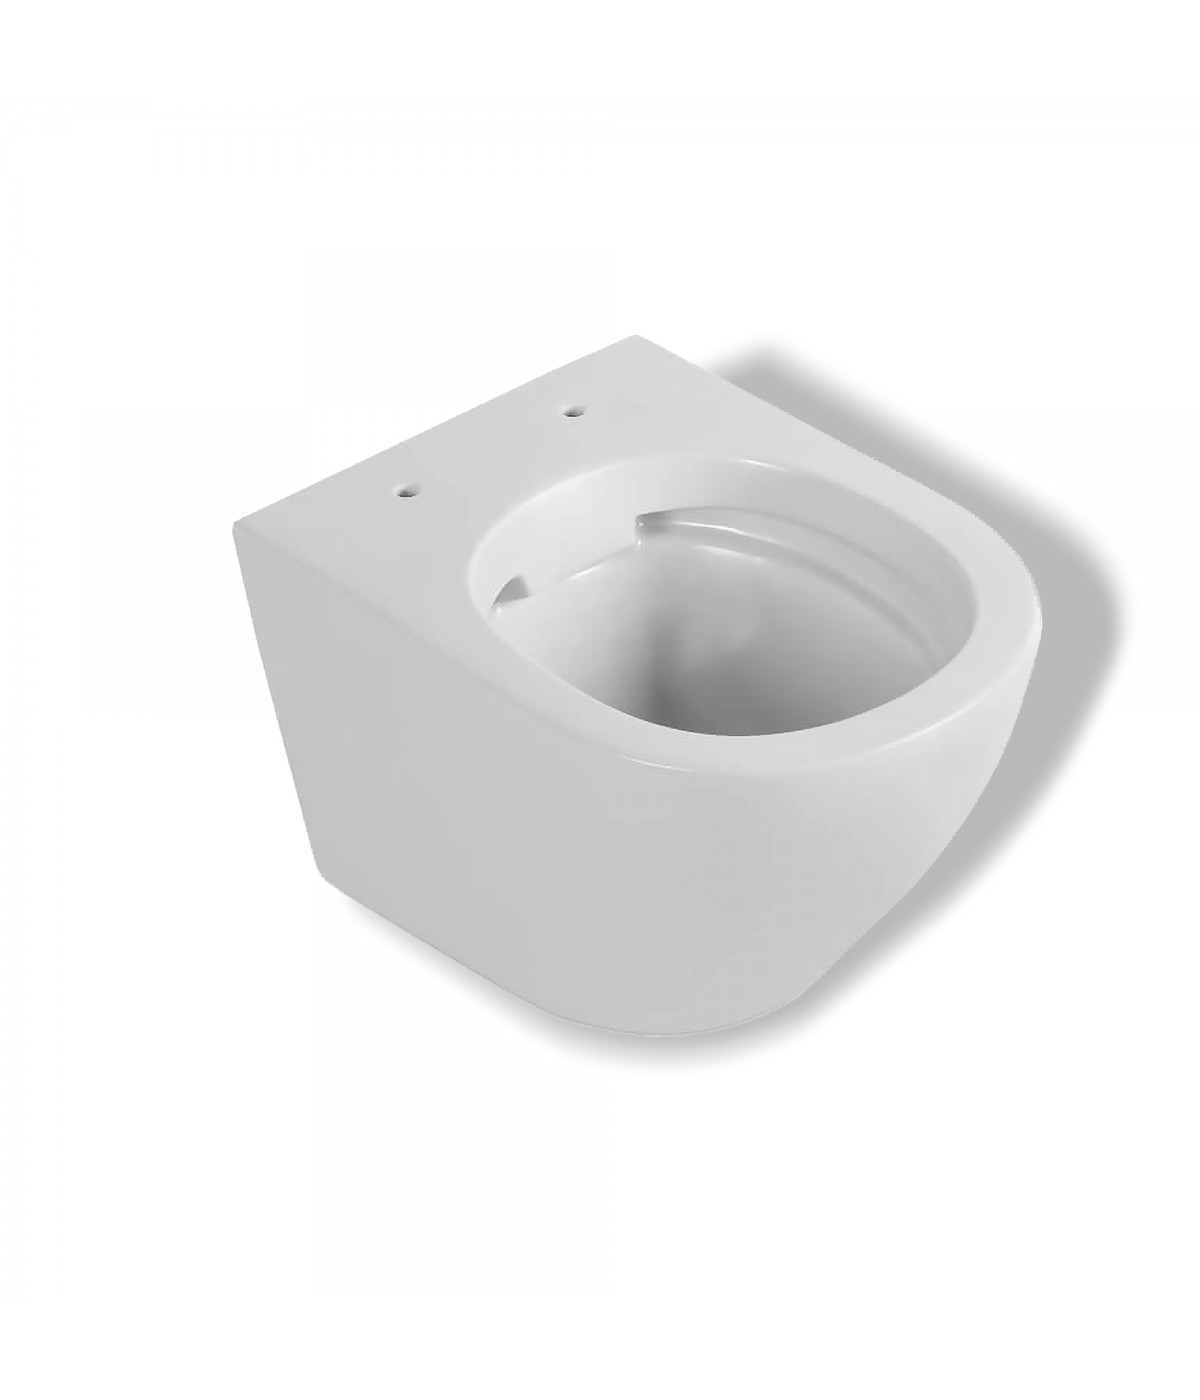 Set: wc-vorwandelement duofix + wc-toilette slim soft-close desna